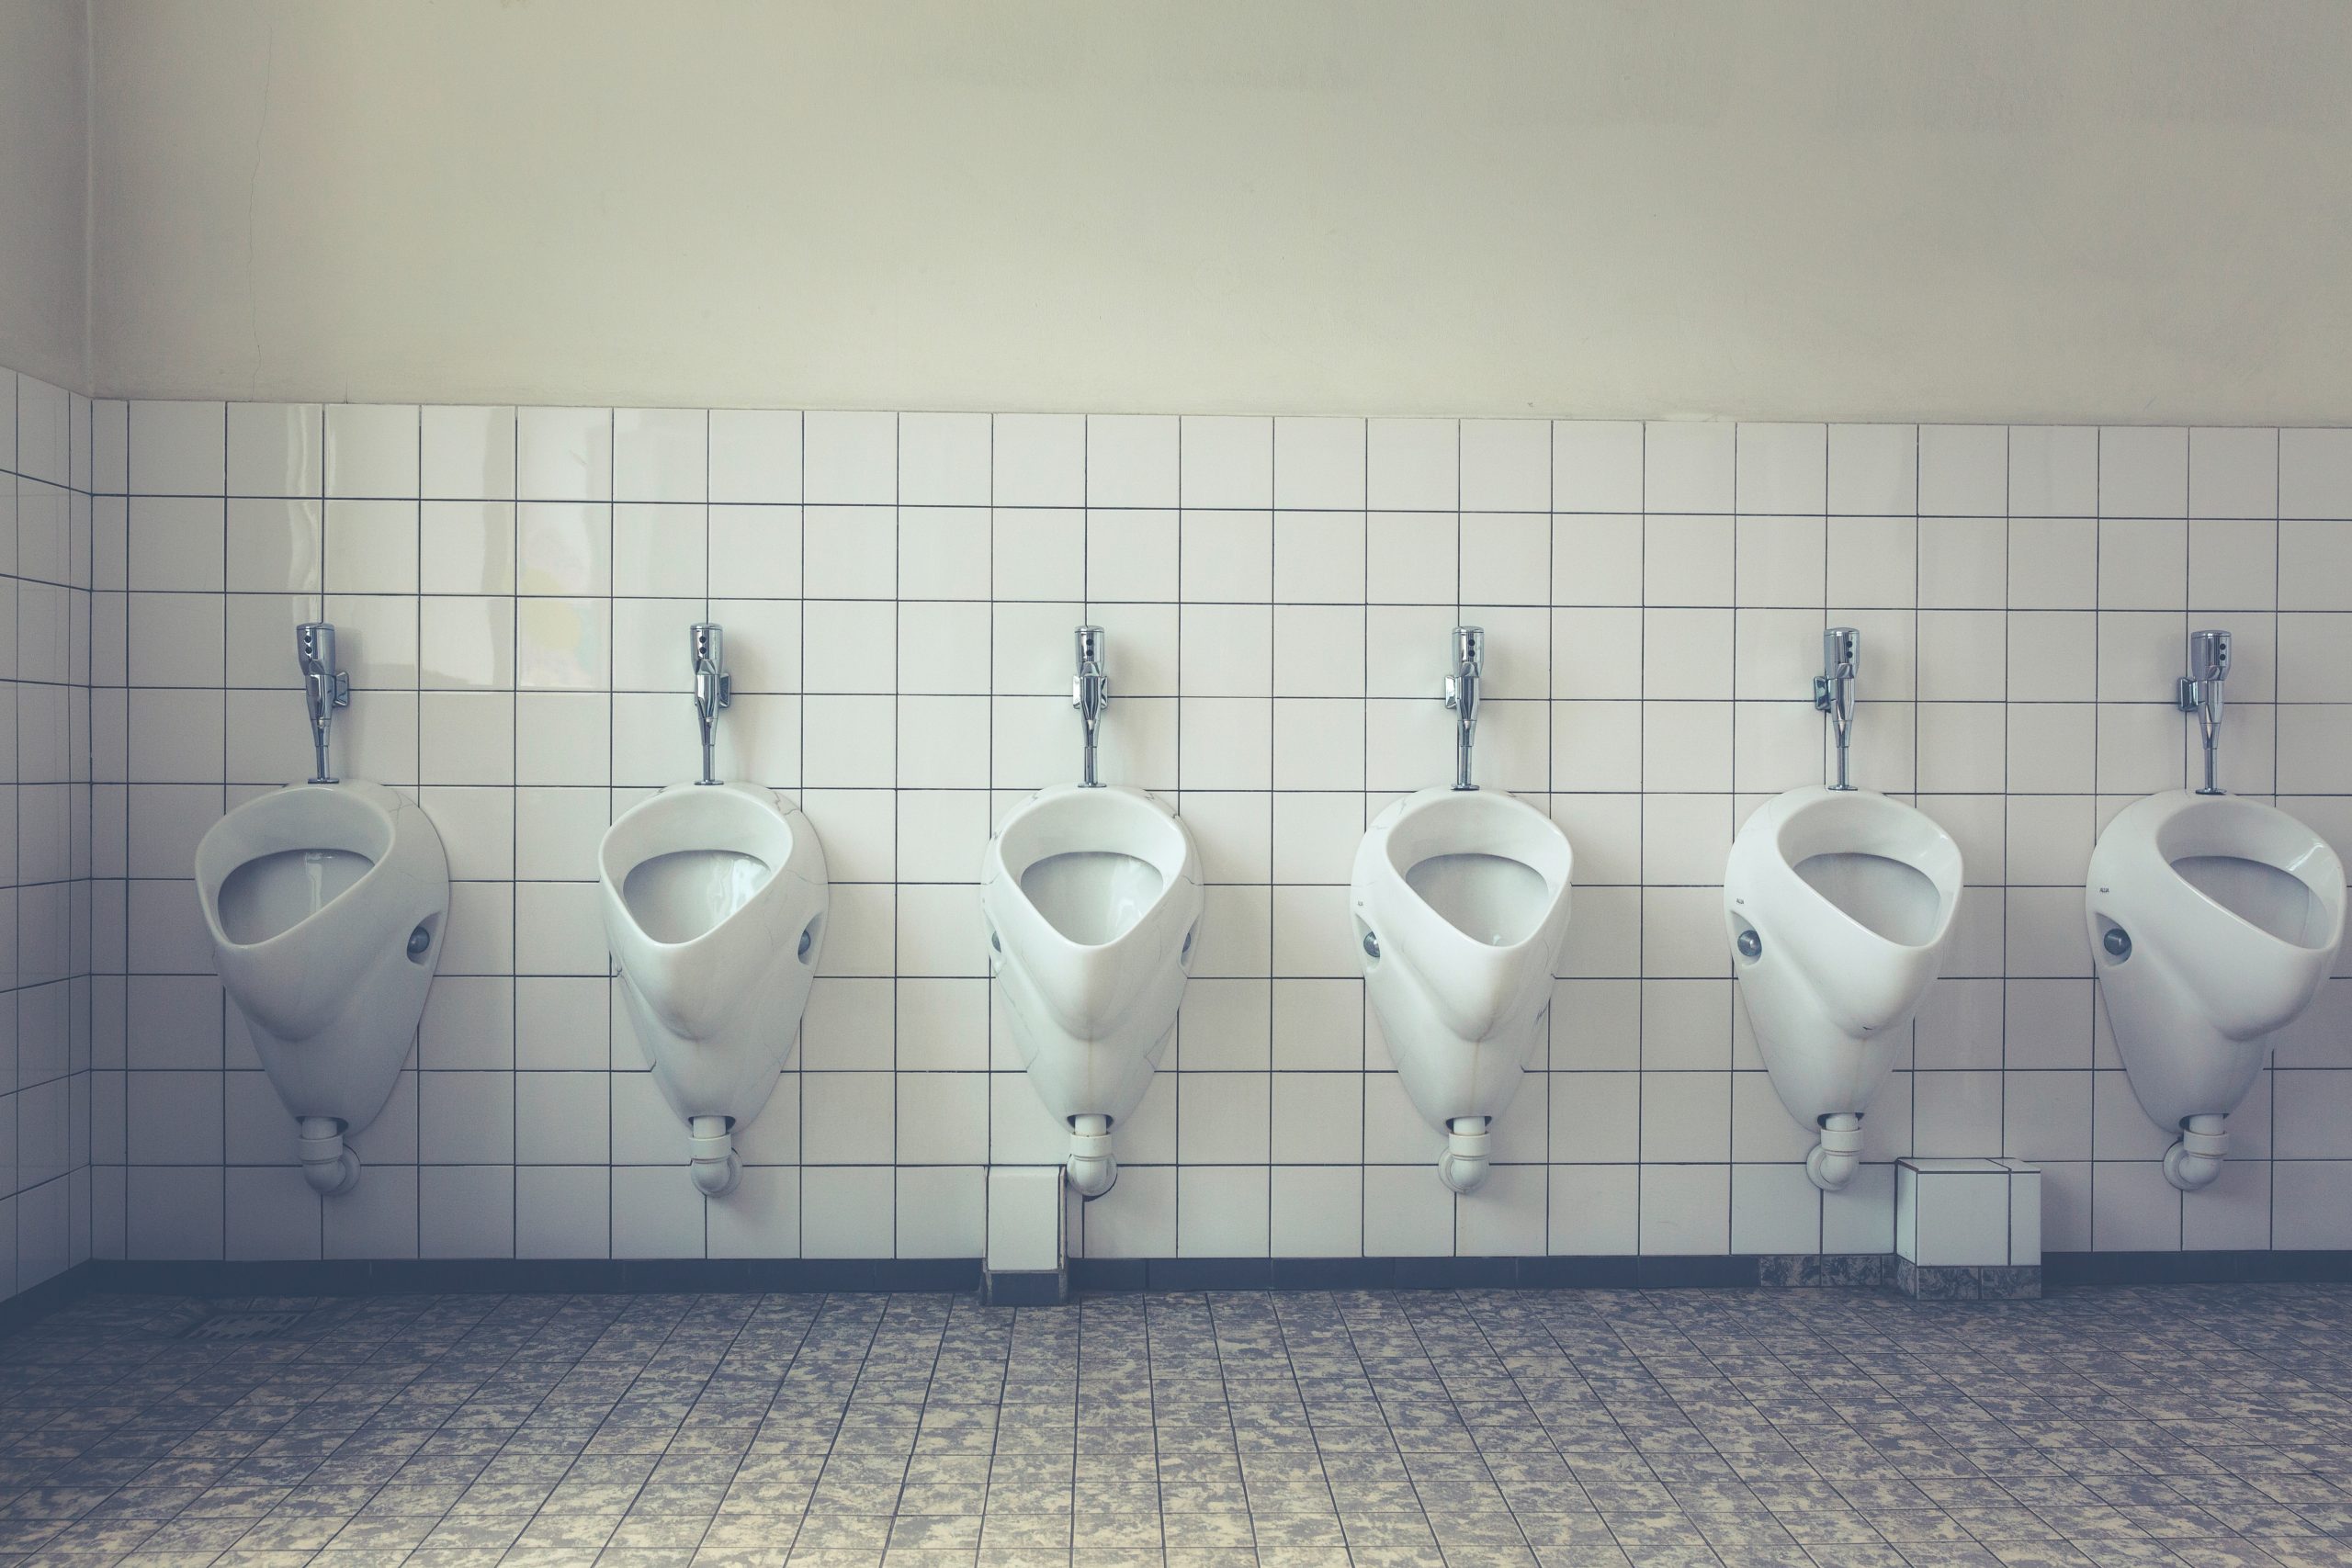 Office bathroom urinals